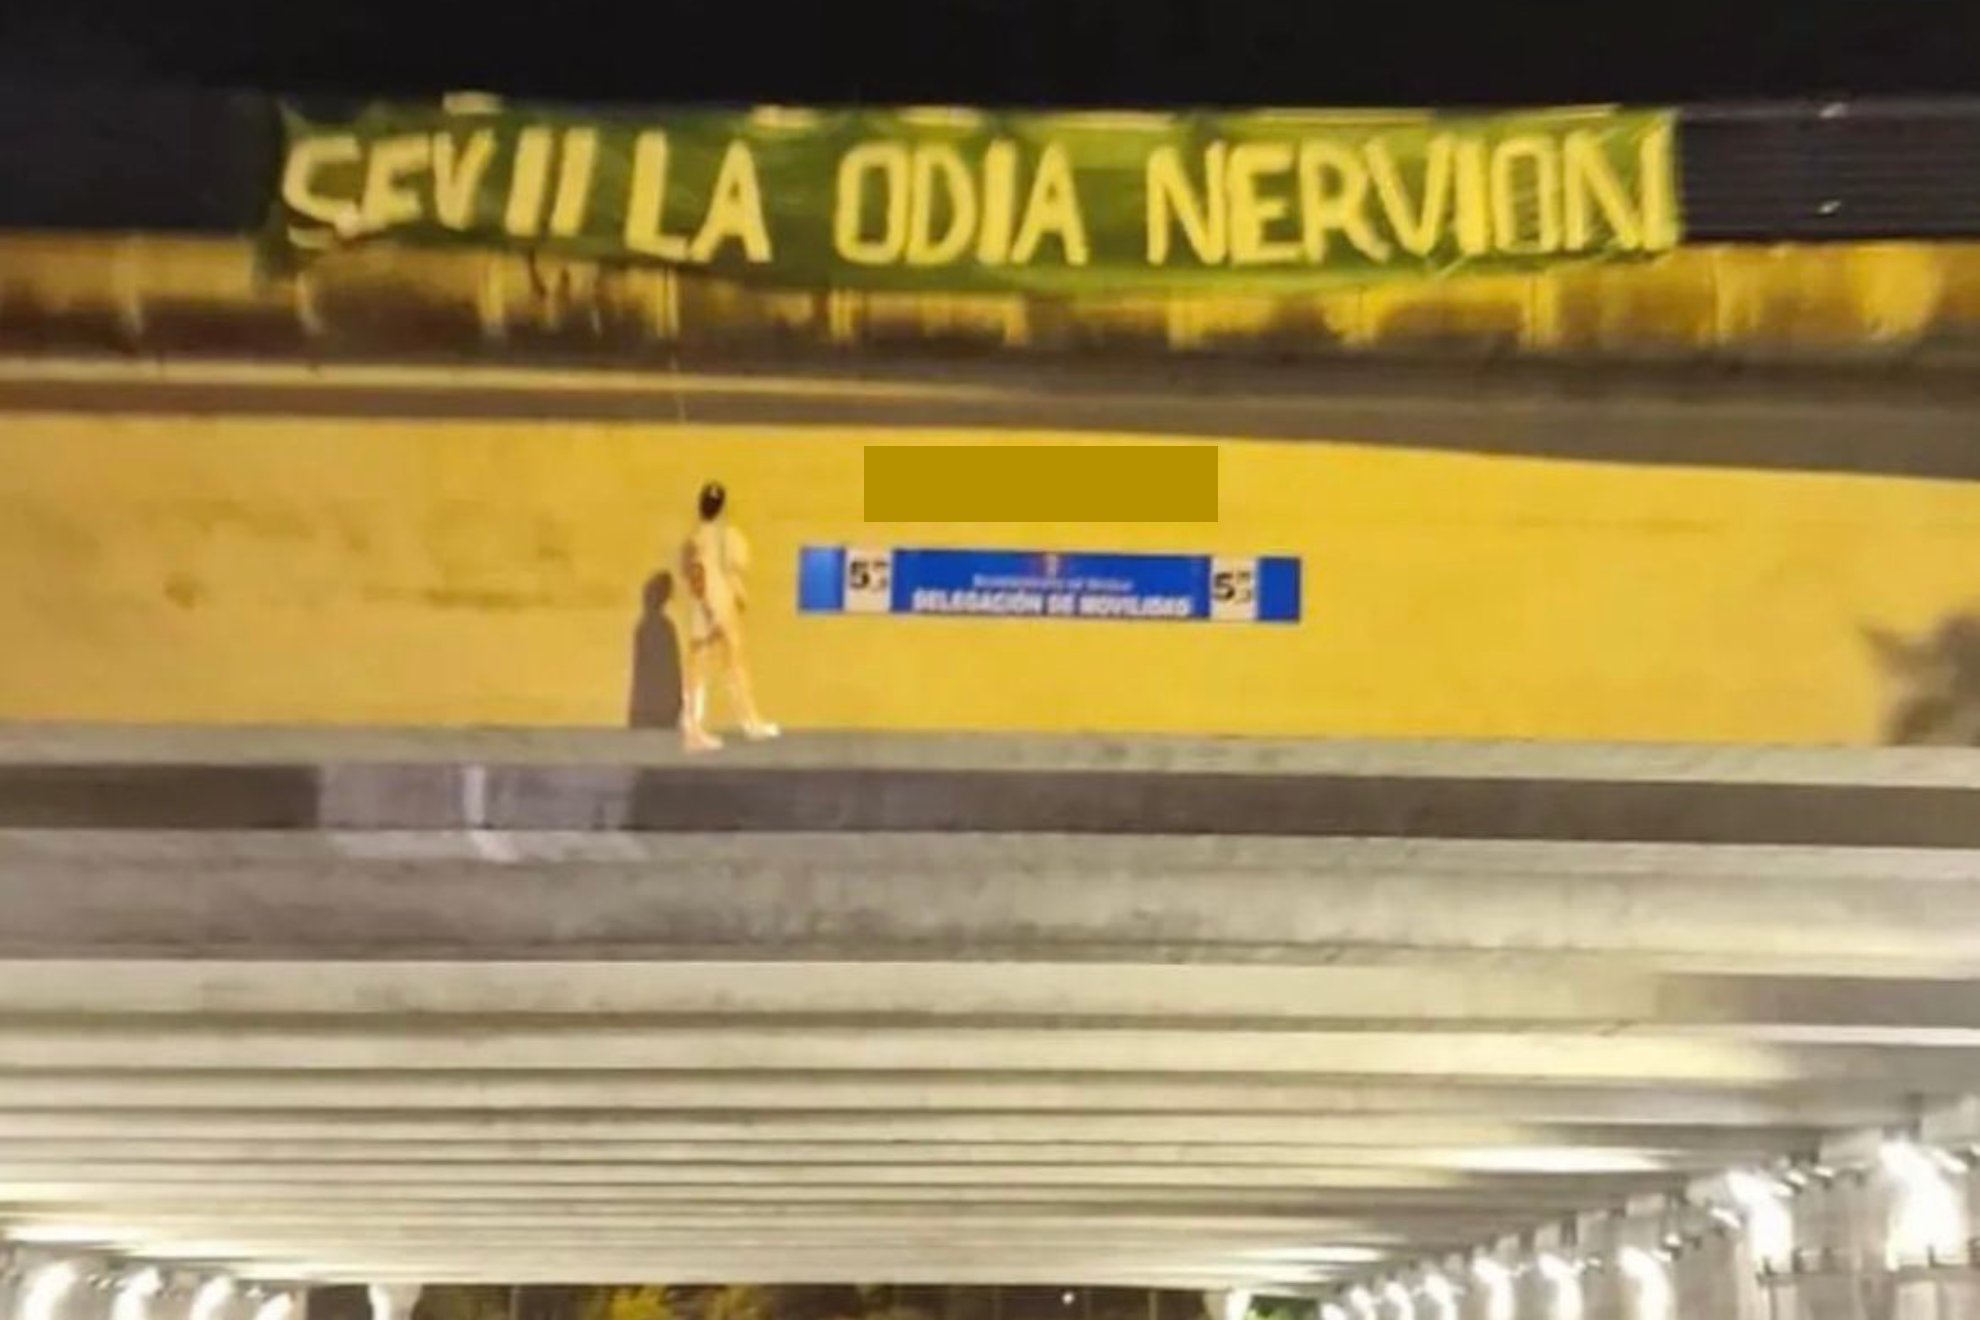 La pancarta con "Sevilla odia Nervi�n" y un mu�eco de Jordan